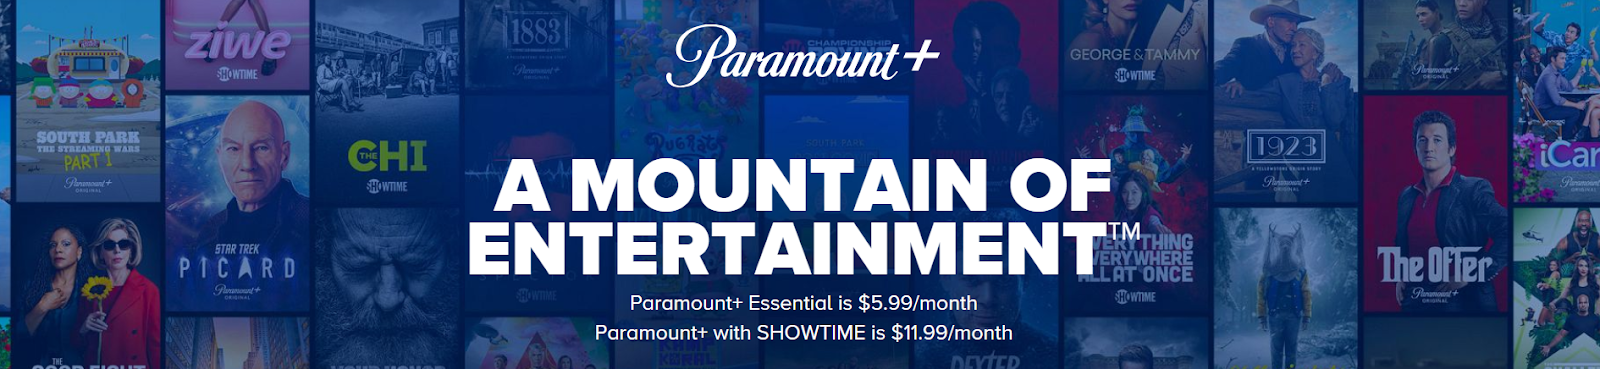 A mountain of entertainment at Paramount Plus
